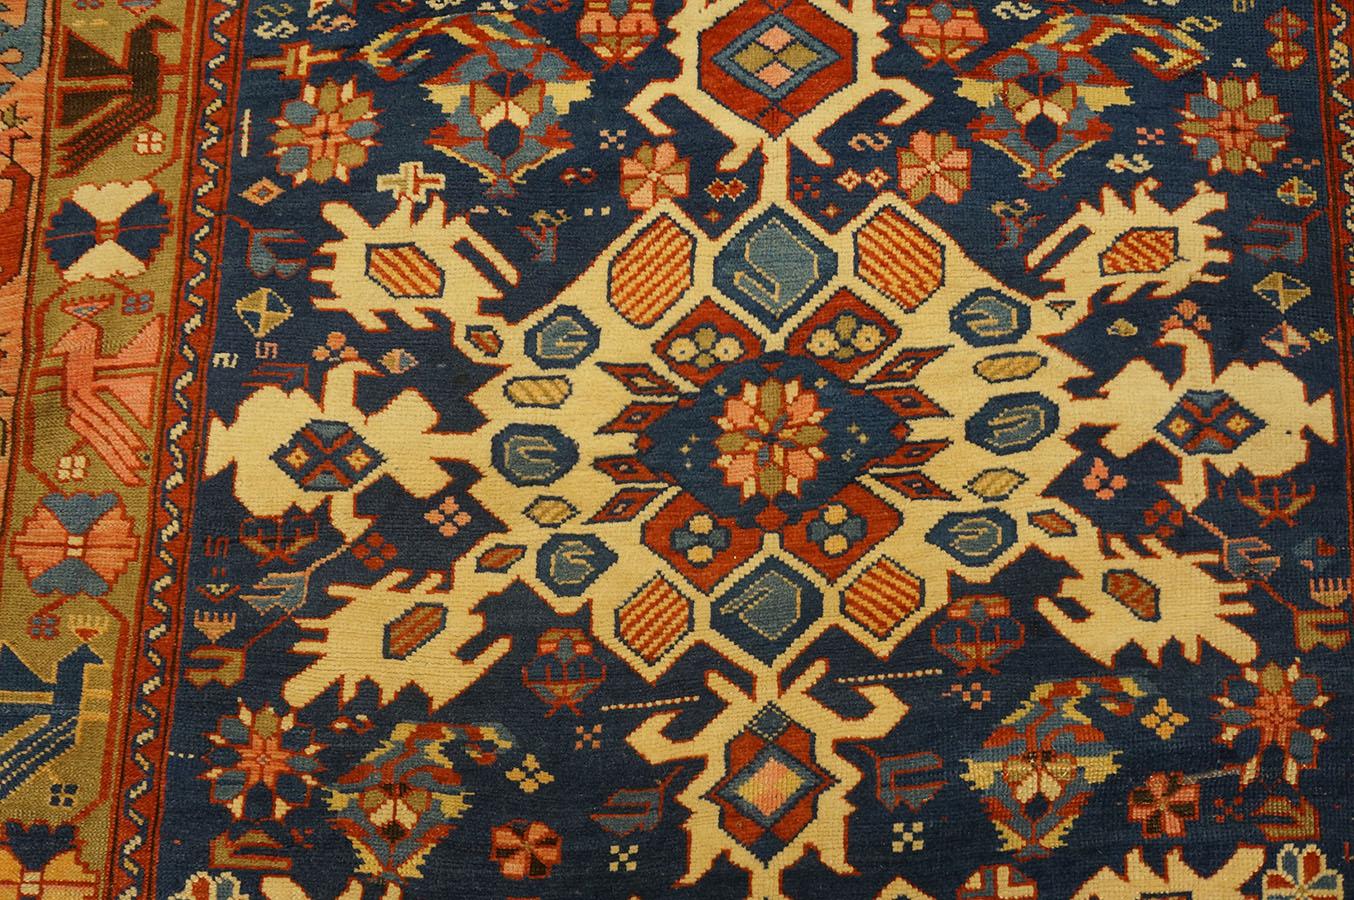 Late 19th Century Caucasian Bidjov Carpet ( 4'6'' x 5'8'' - 122 x 183 cm) For Sale 3